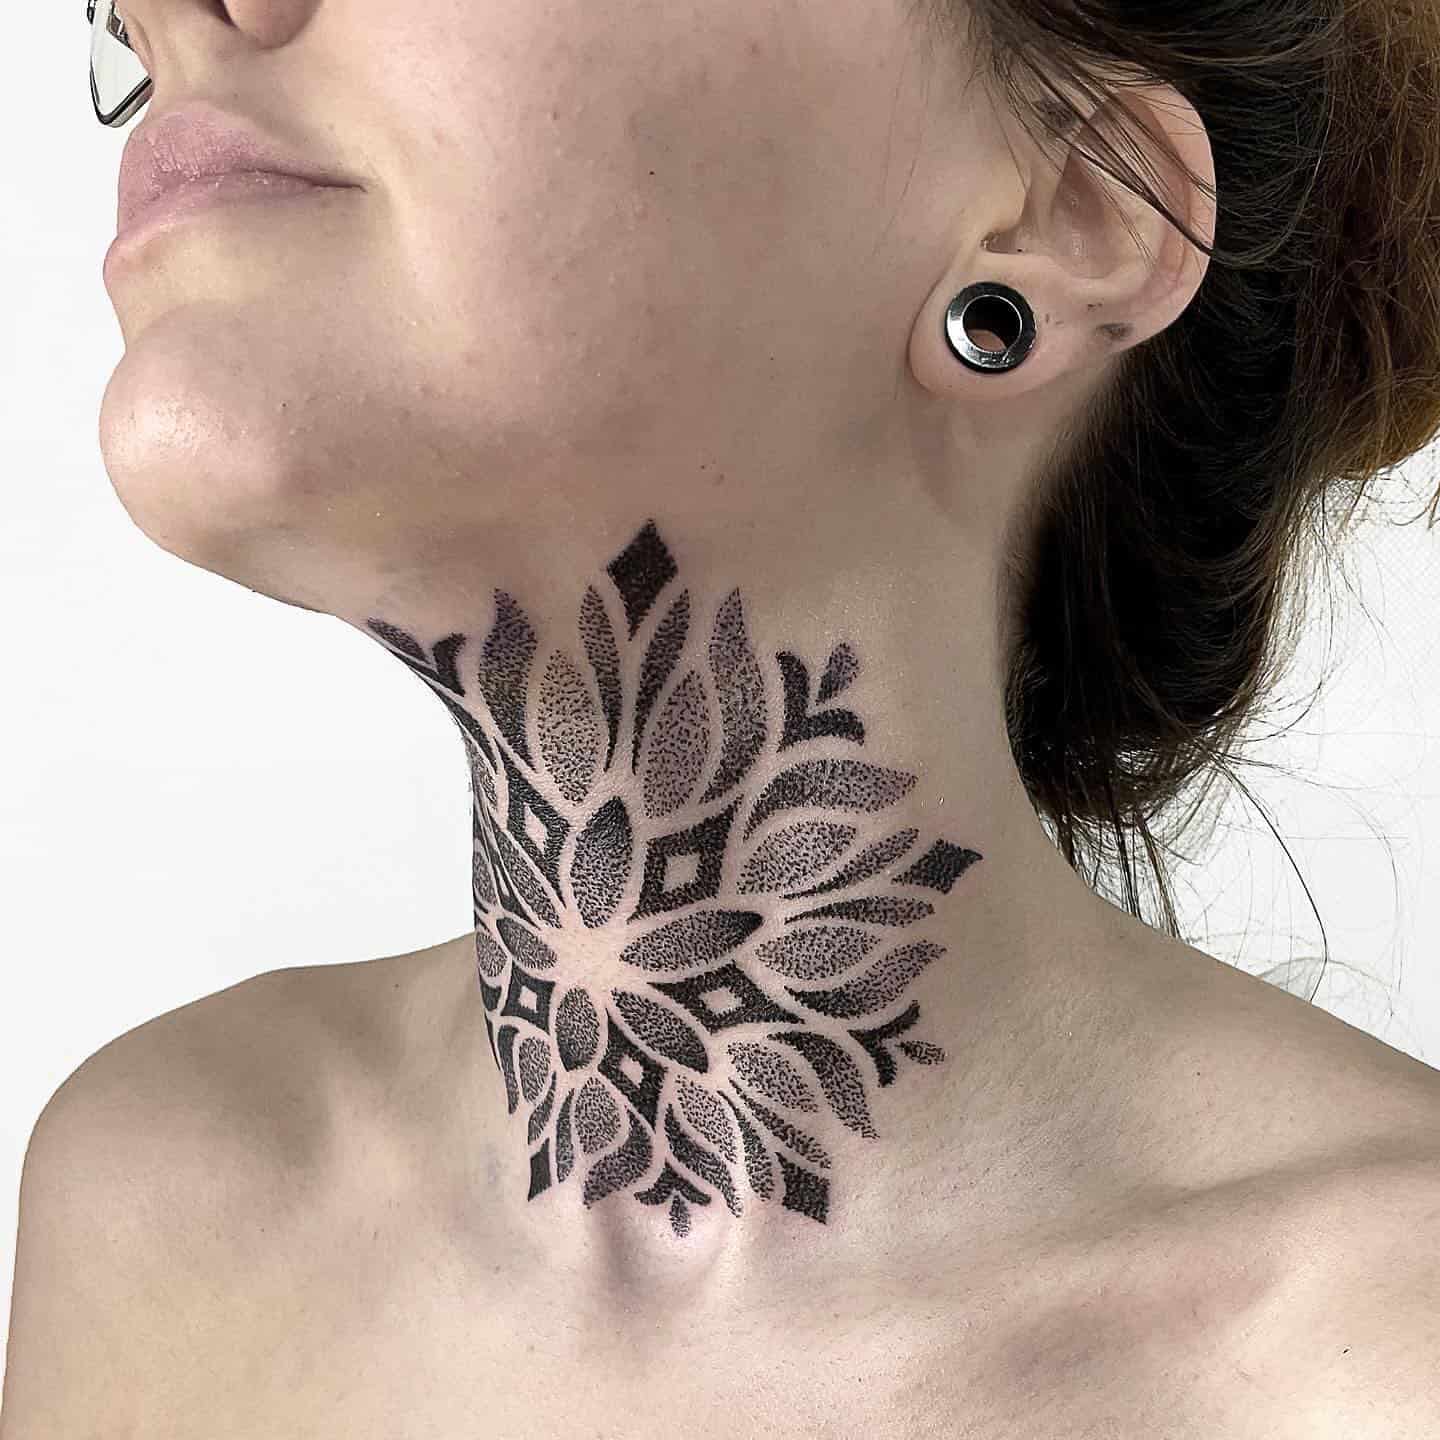 10 Best Neck Tattoos The Best Ideas For Neck Tattoos  MrInkwells